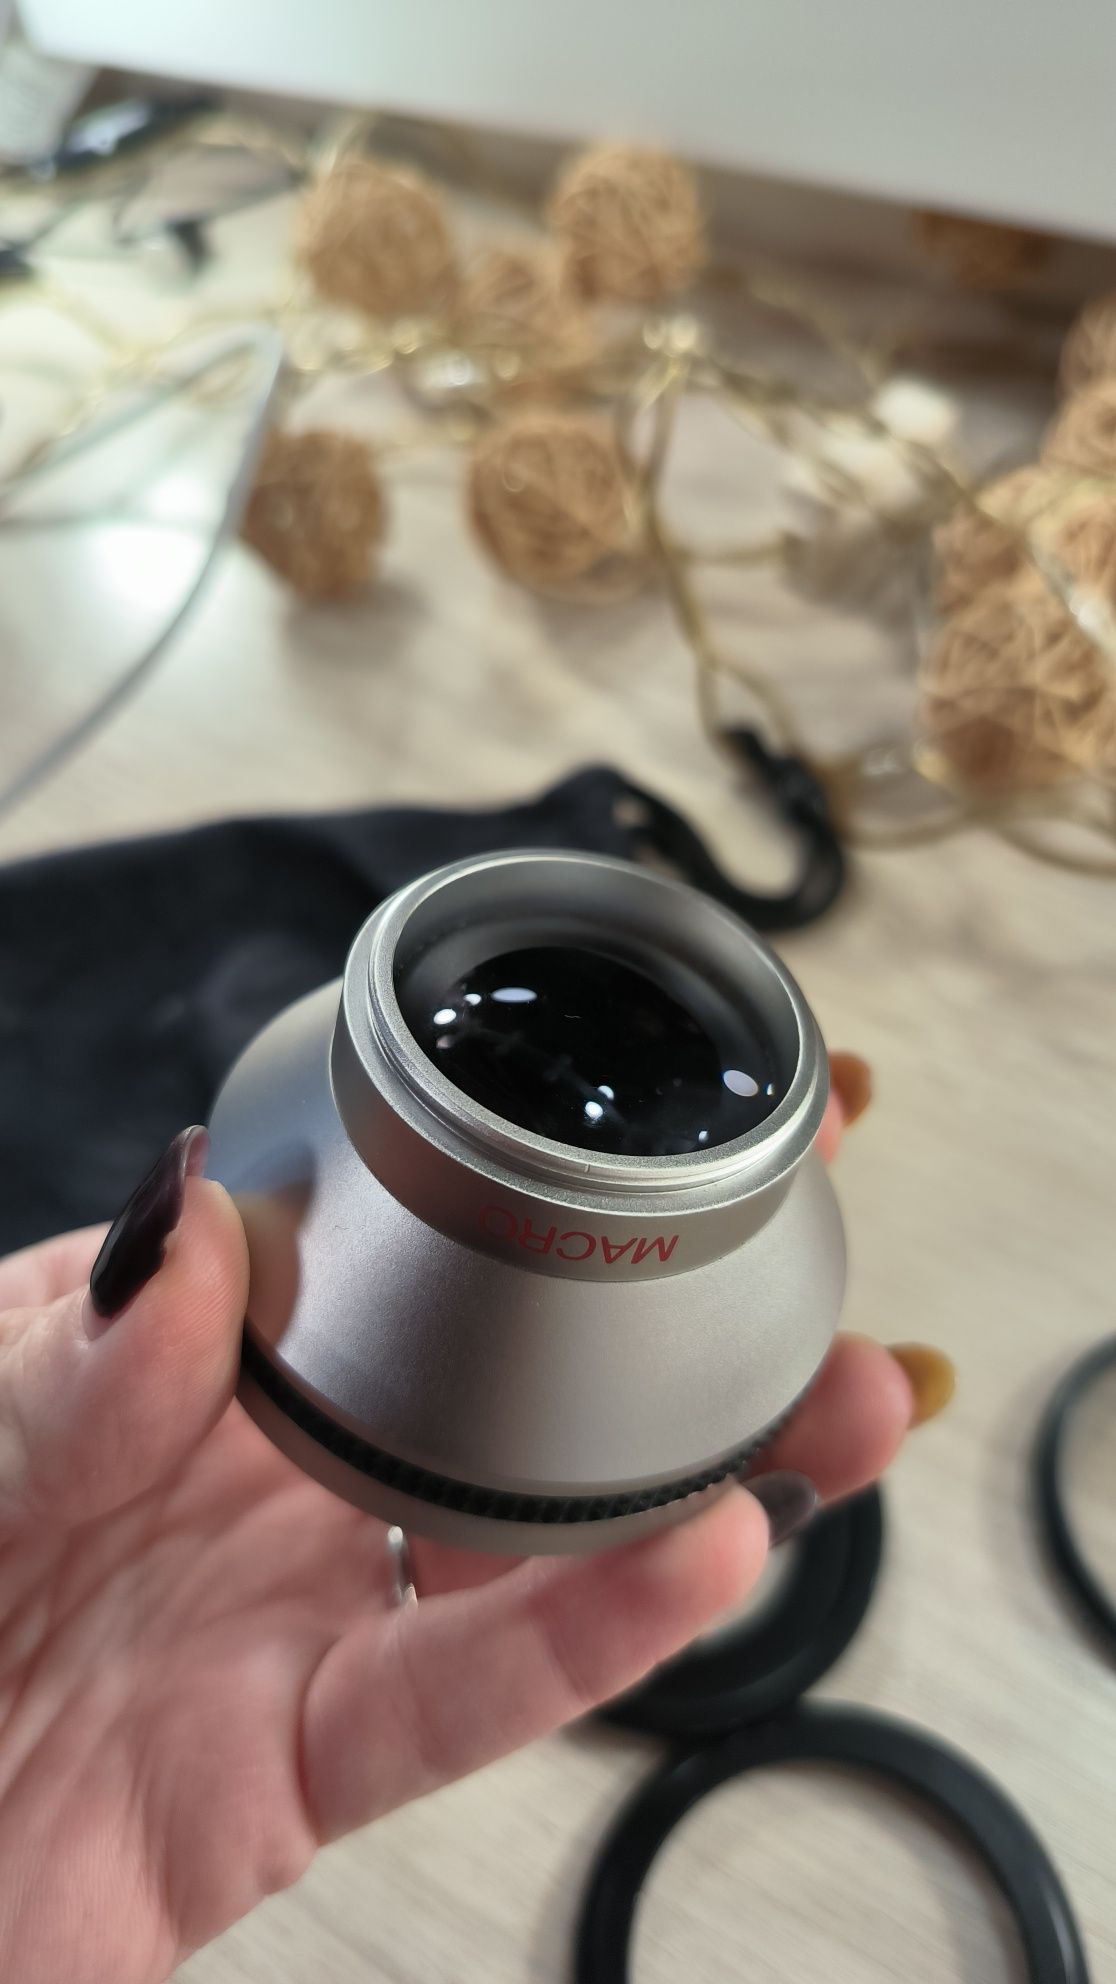 Об'єктив Titanium Digital AF Video 0.45x Wide Lens Made in Japan